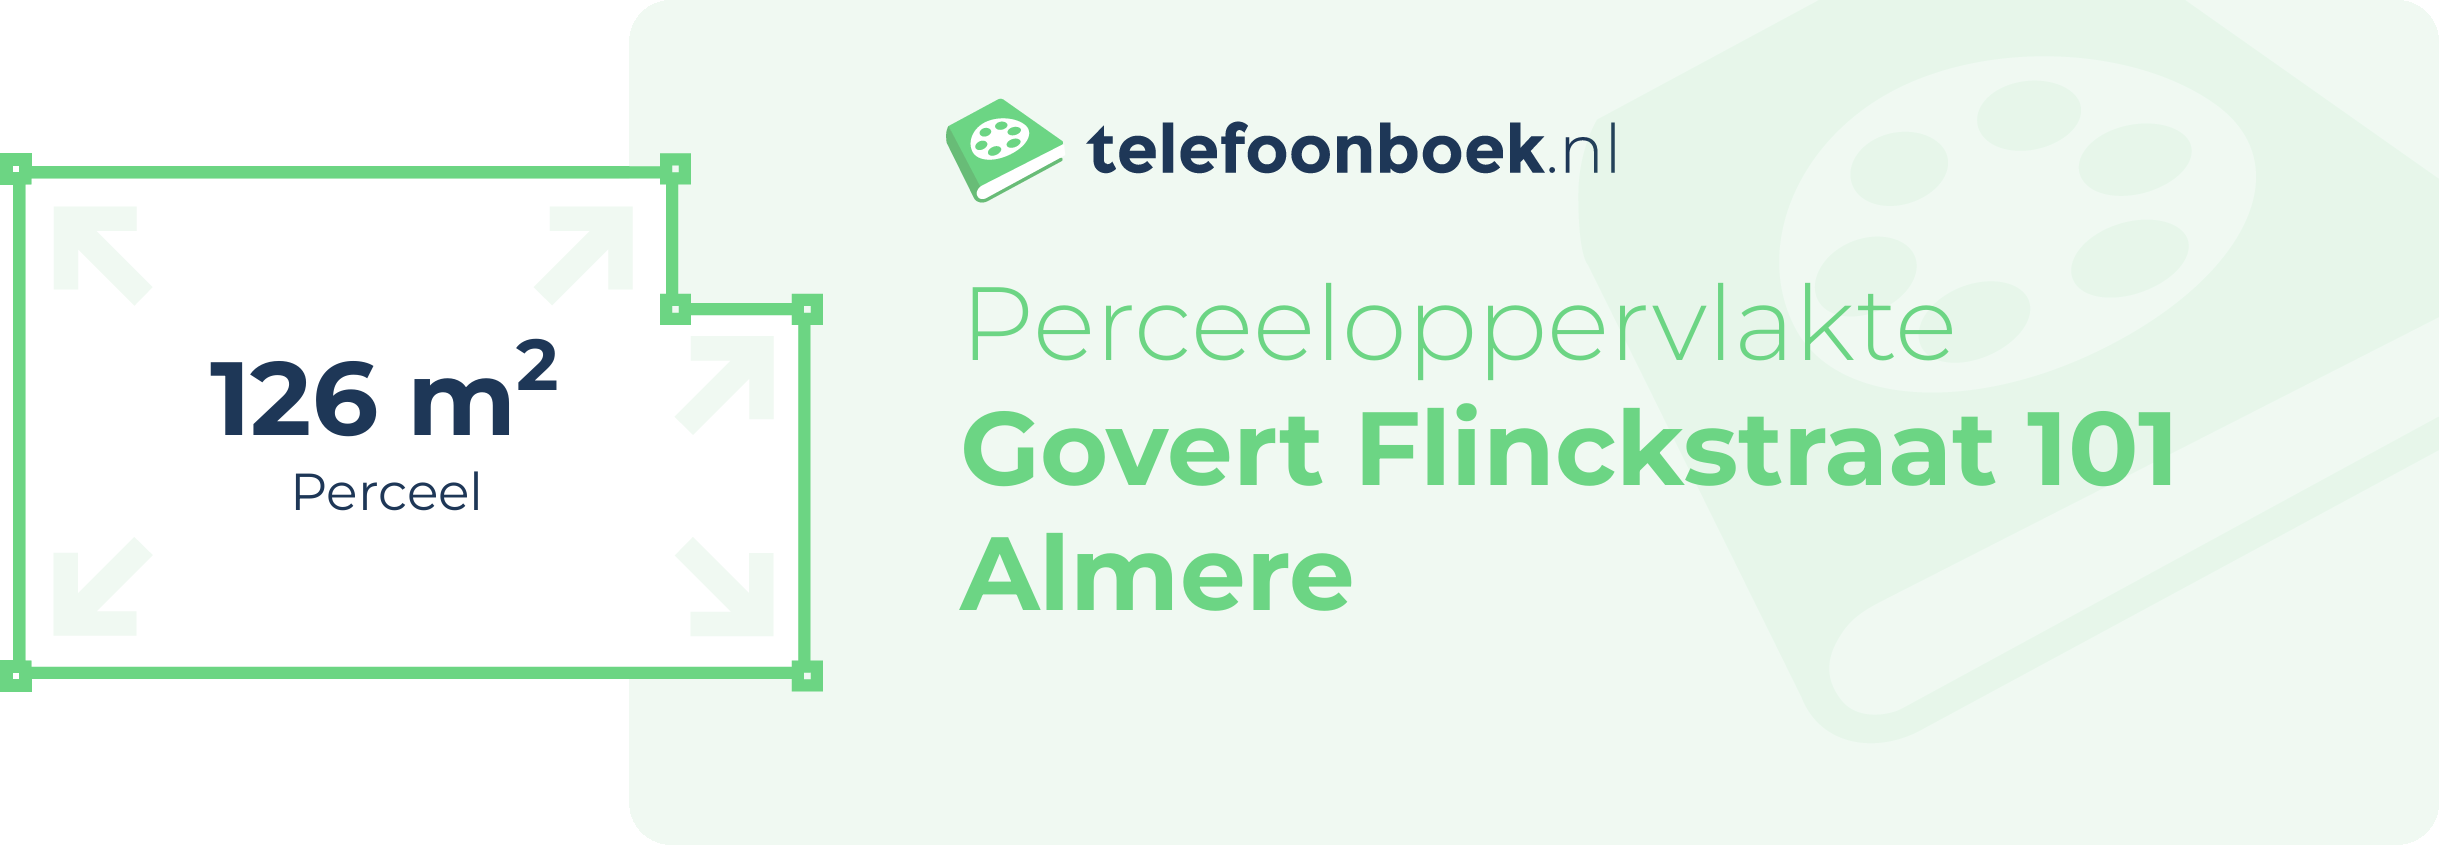 Perceeloppervlakte Govert Flinckstraat 101 Almere